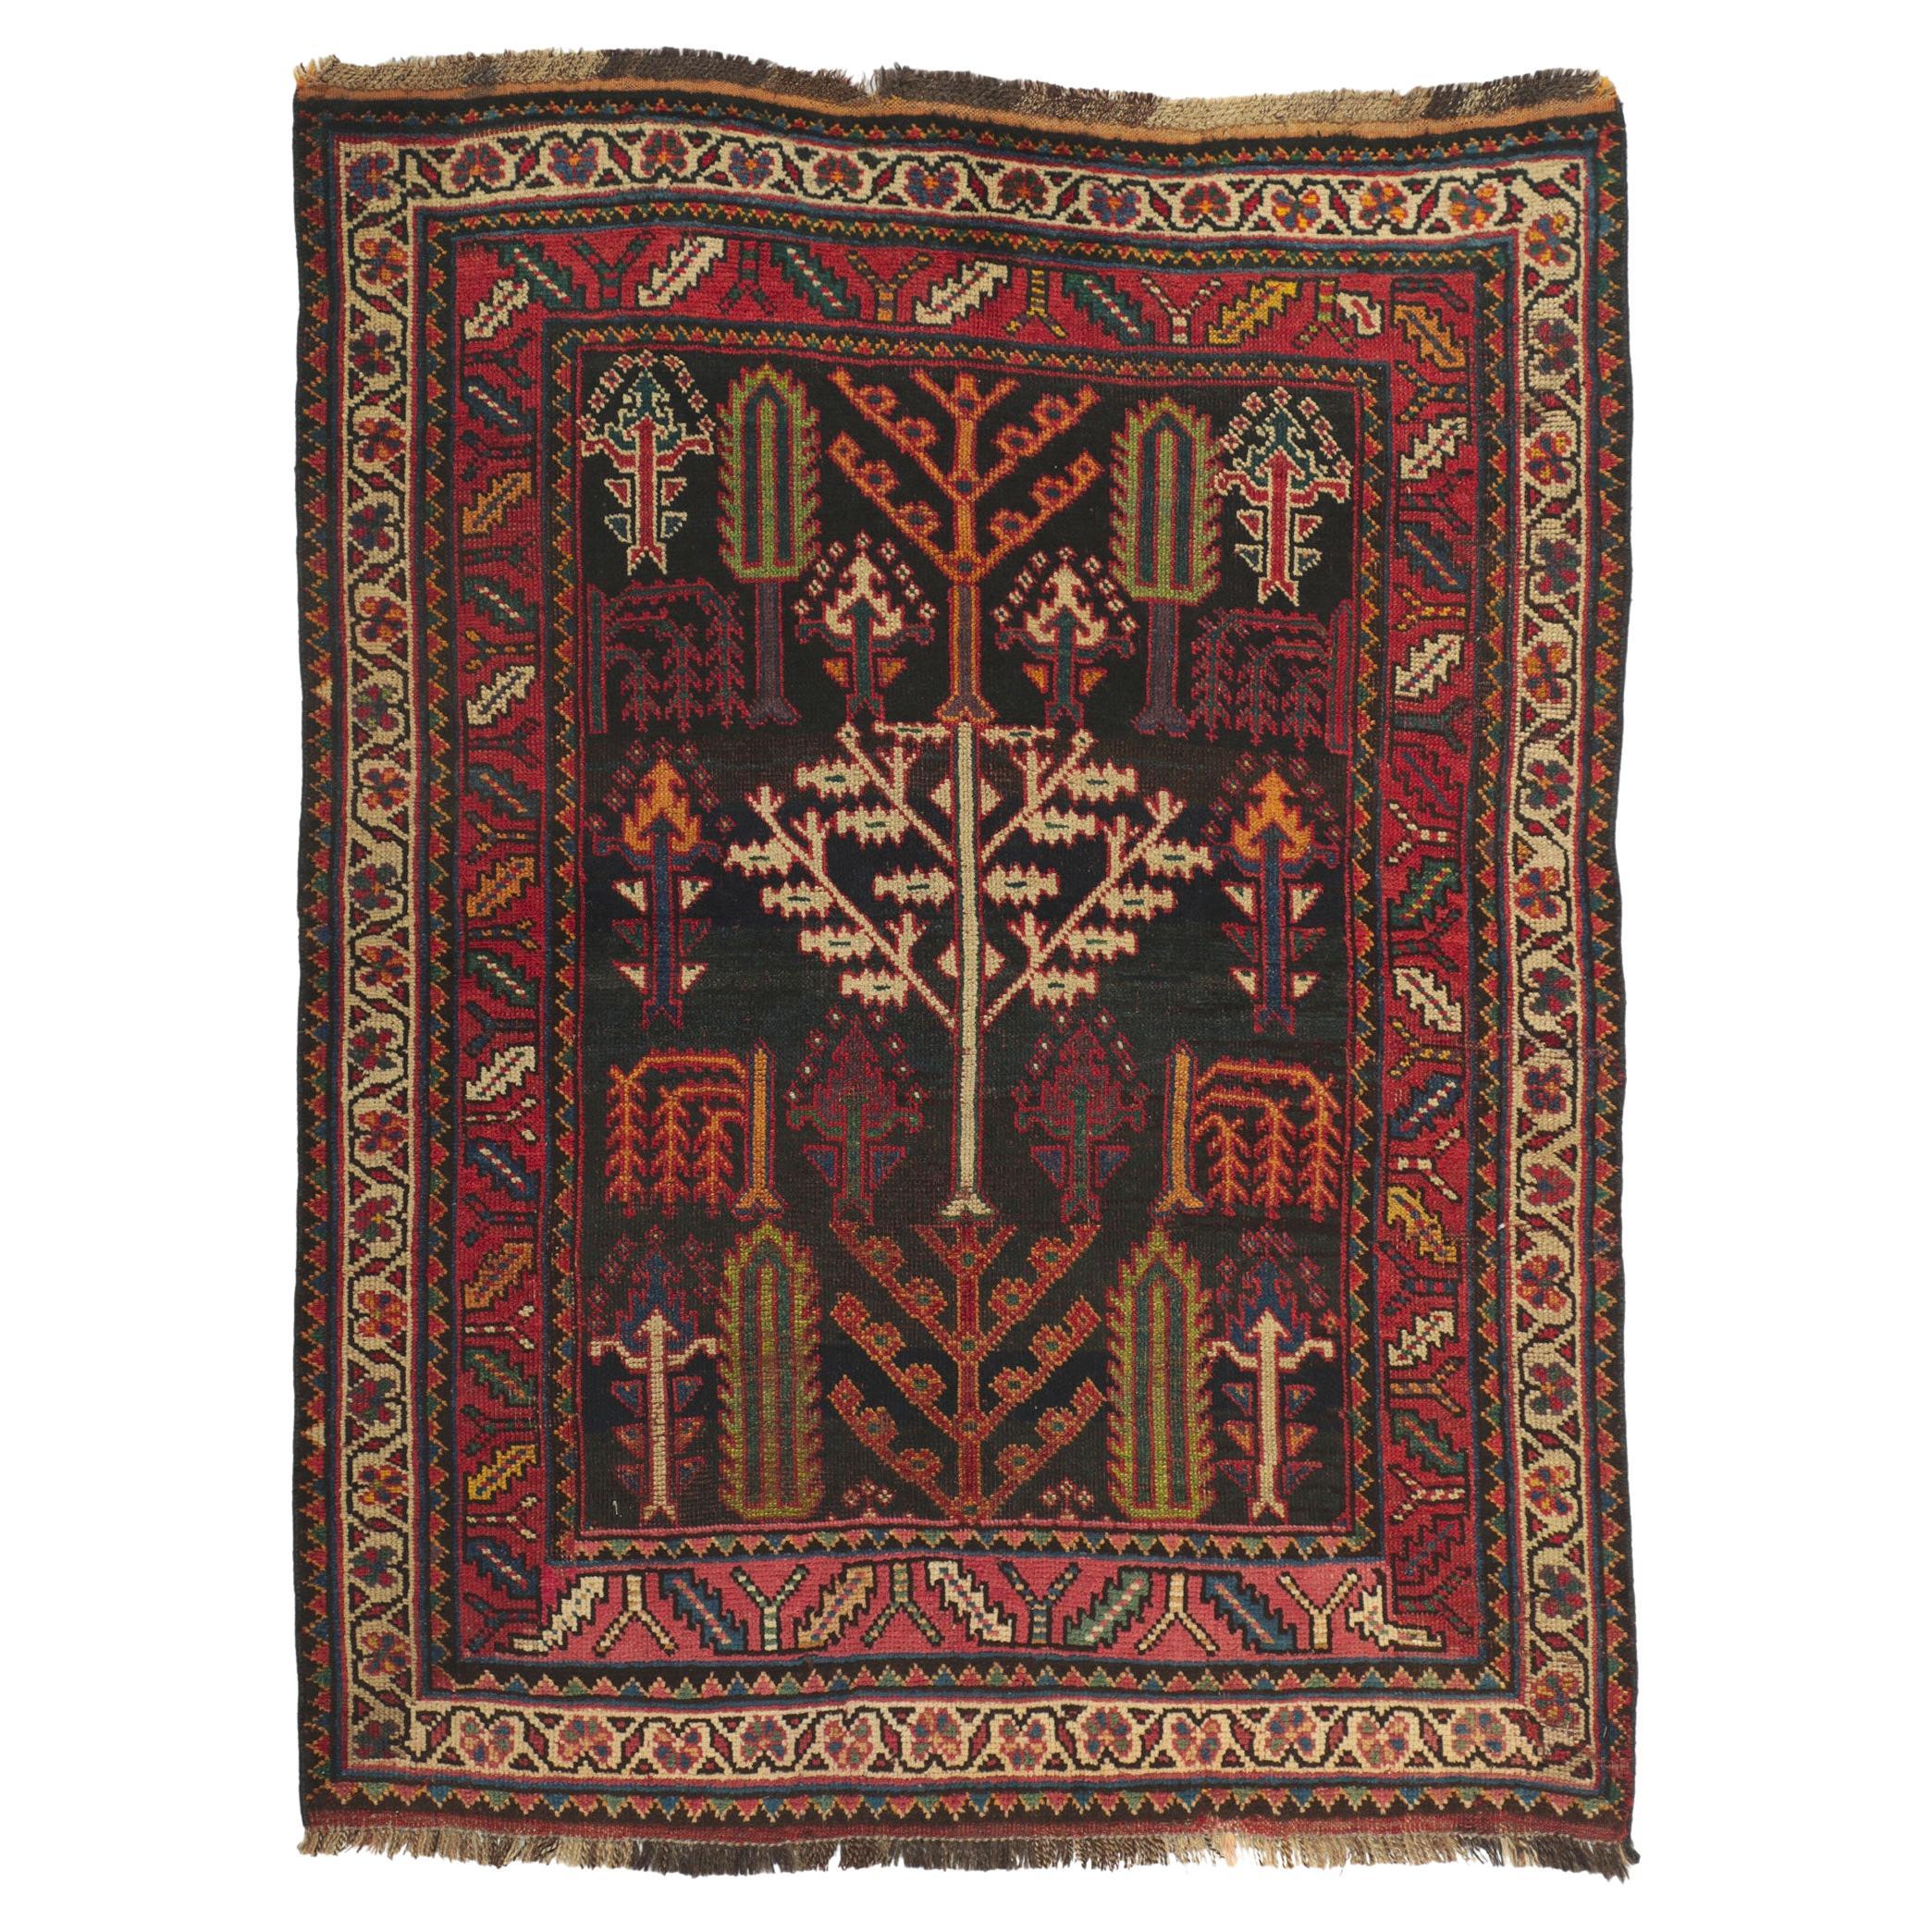 Antique Persian Shiraz Rug with Tree of Life Design